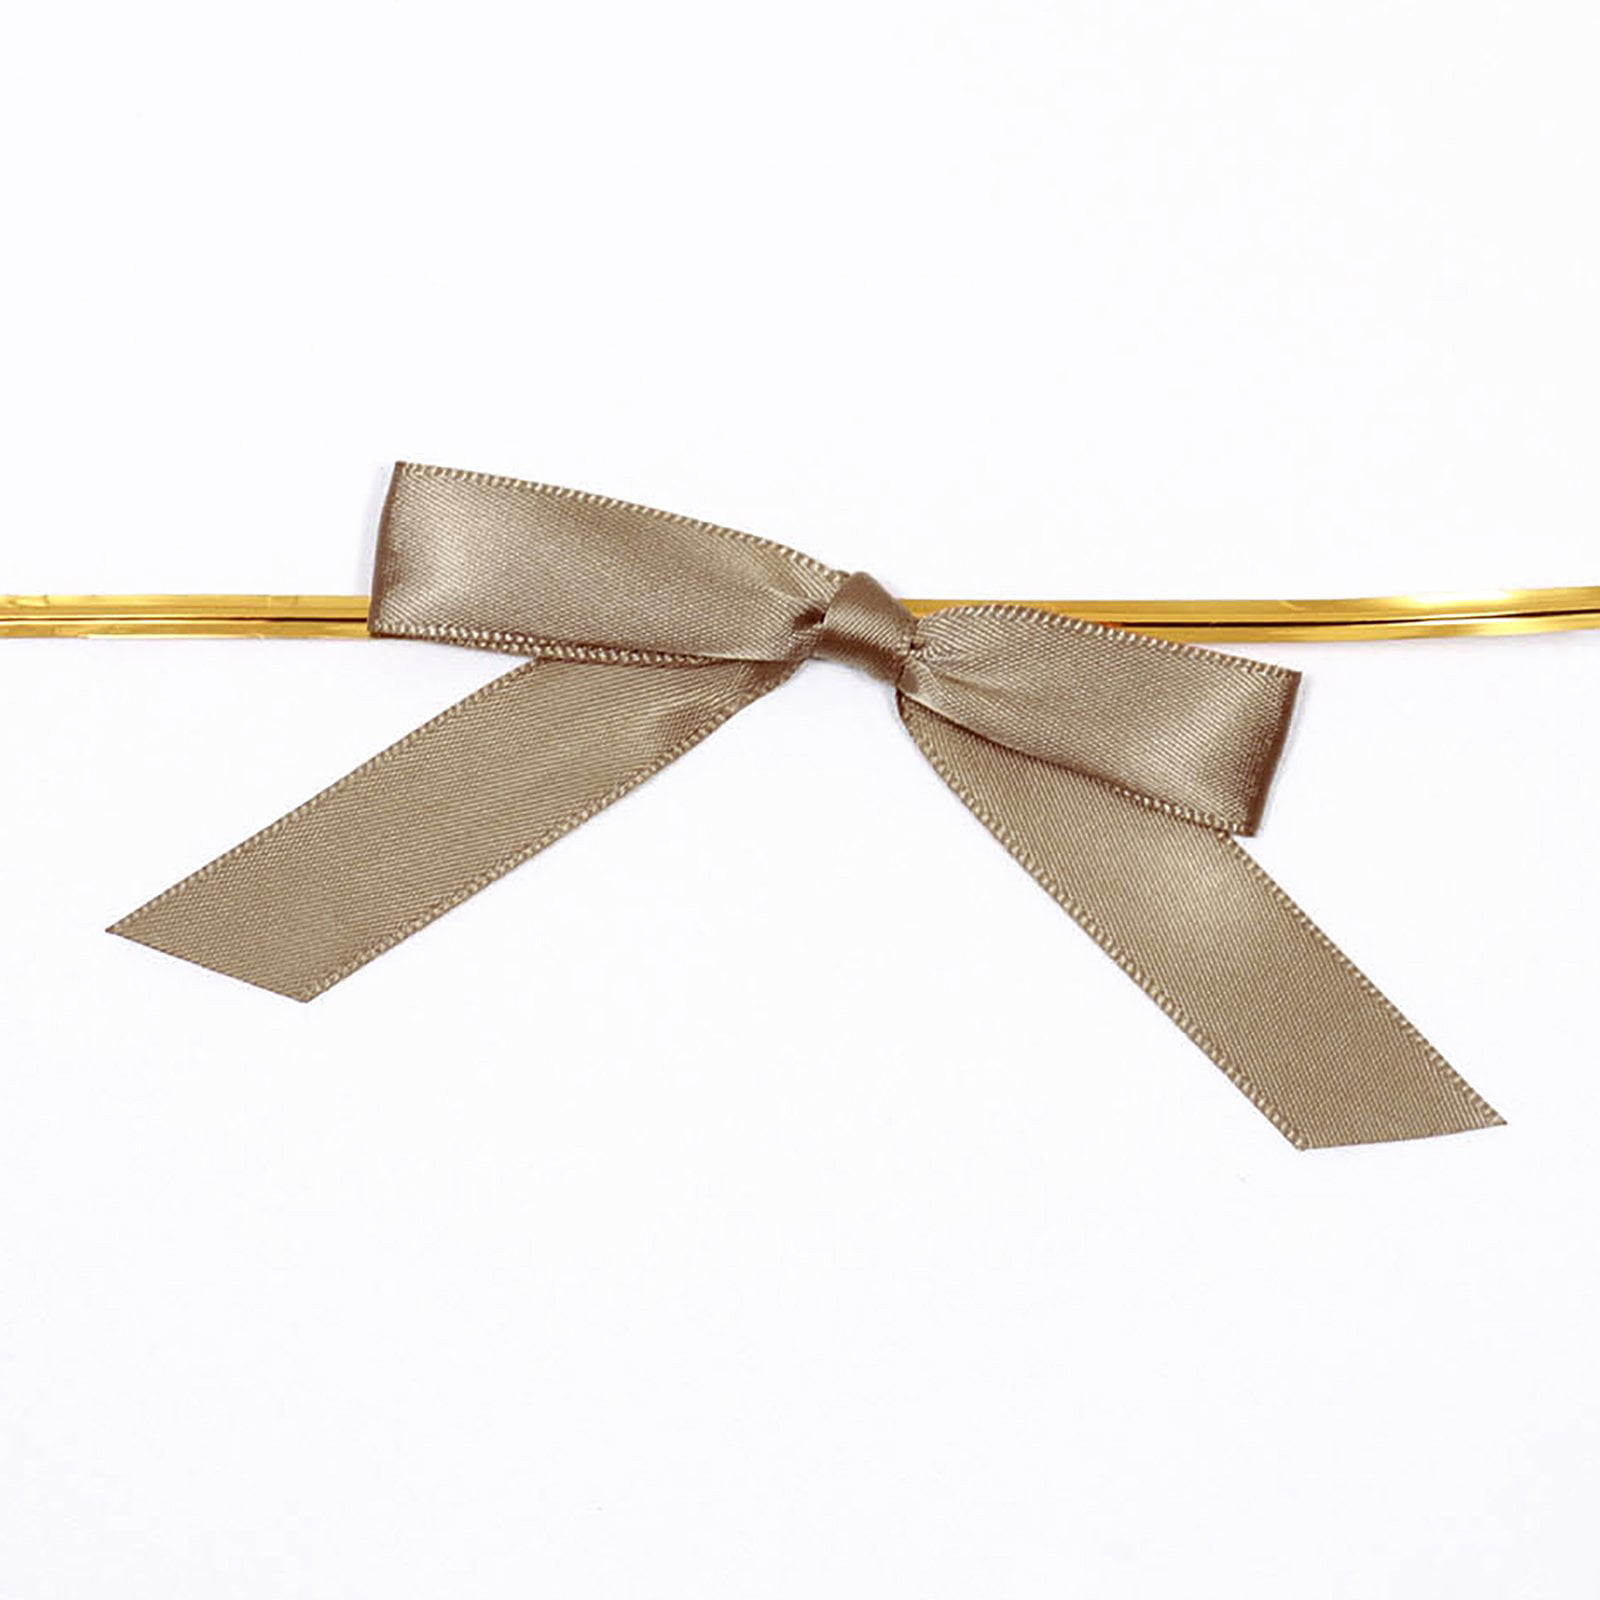 DINDOSAL gold Ribbon 1 Inch Satin Ribbon gold graduation Decoration Ribbon  Silk Ribbon for gift Wrapping Leis Making crafts Wedd